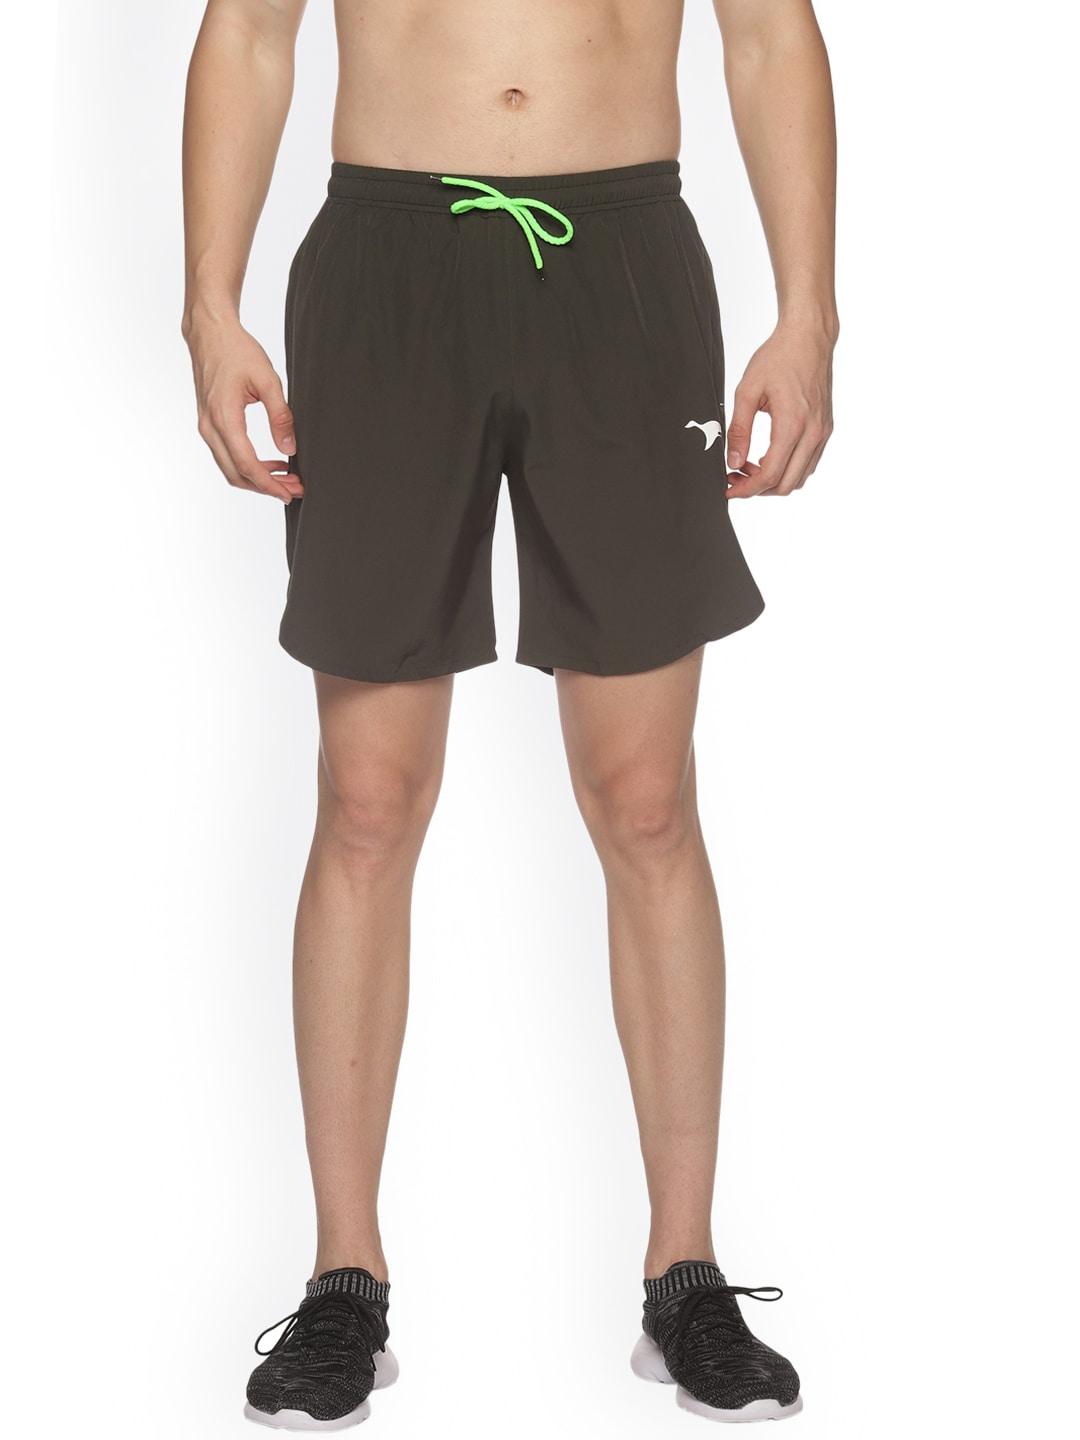 hps-sports-men-green-running-sports-shorts